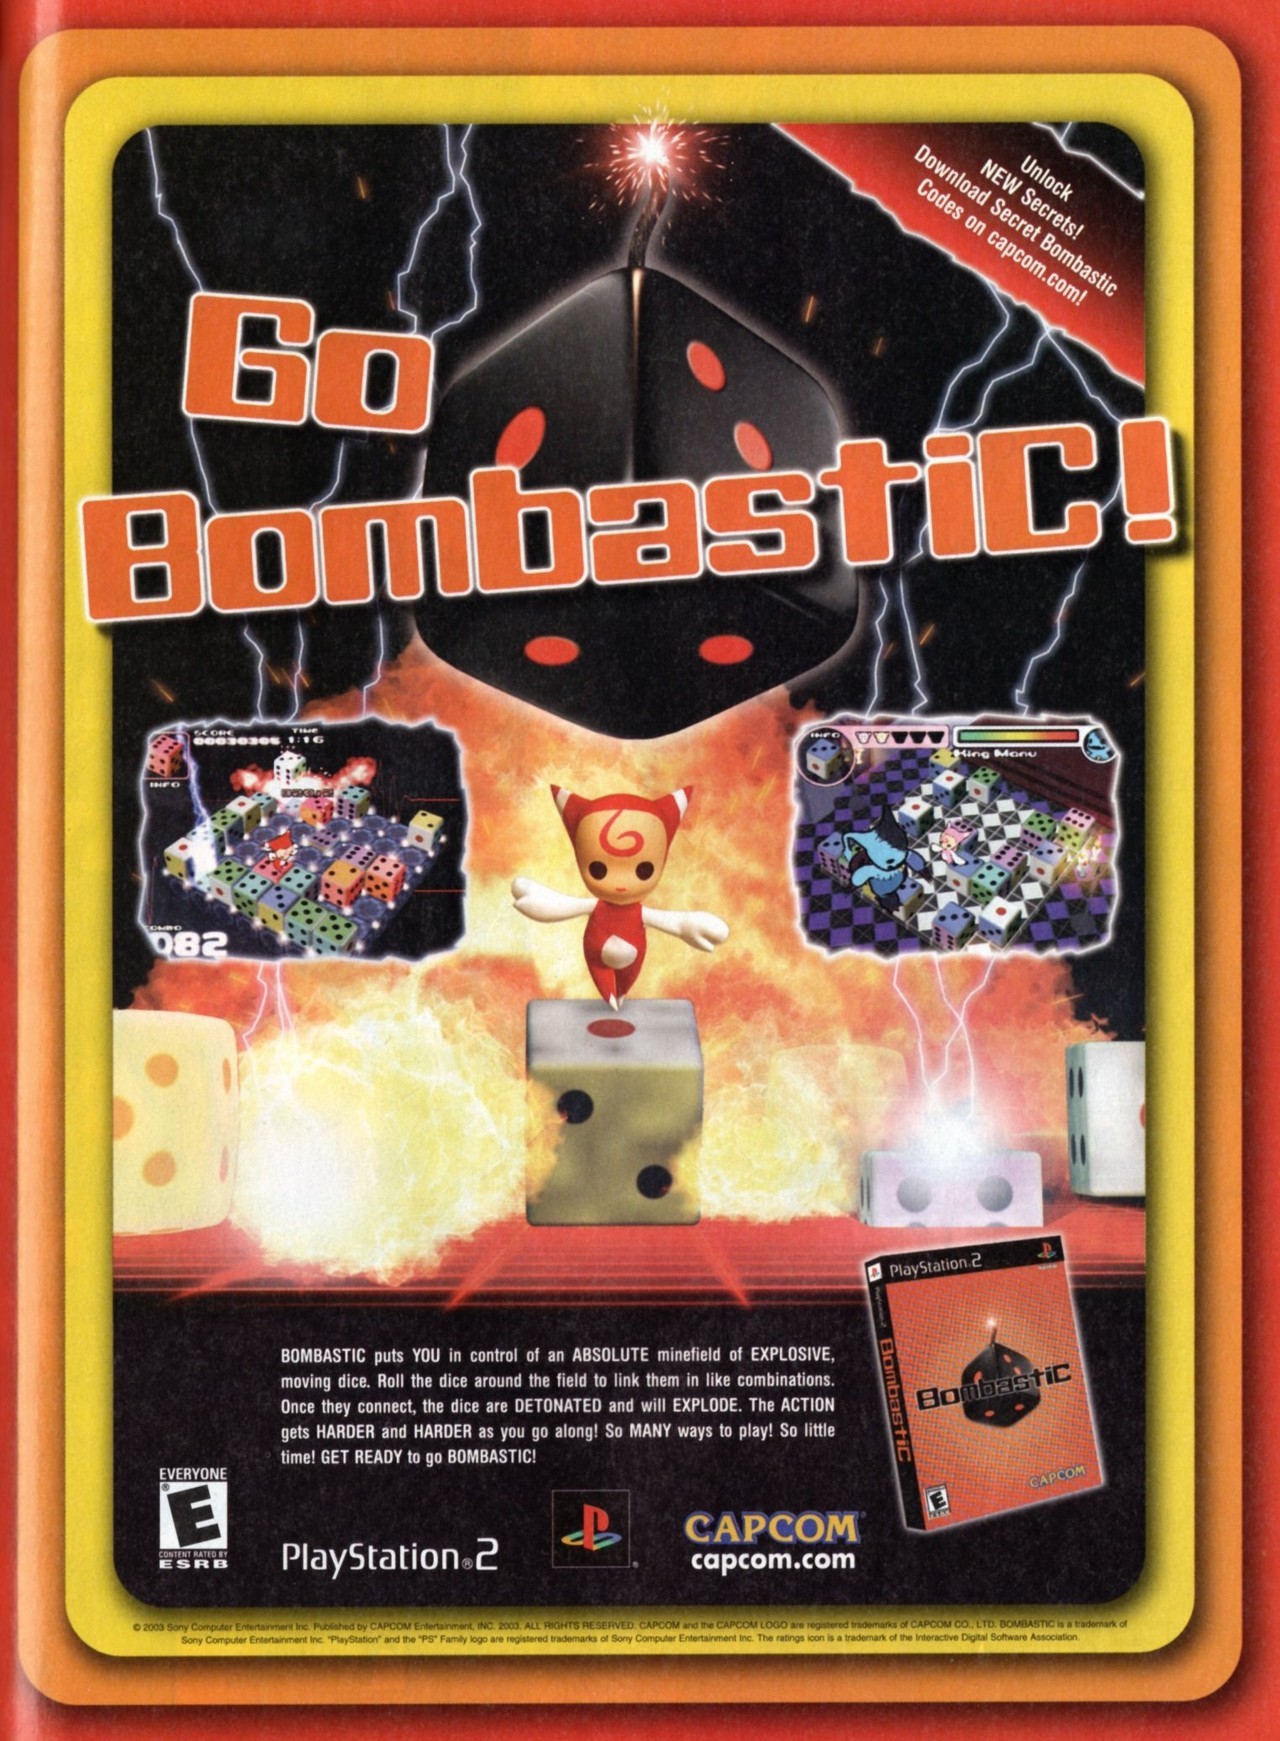 ‘Bombastic’[PS2] [USA] [MAGAZINE] [2003]
• PSM, December 2003 (Vol. 7, #78)
• via personal collection
• ‘Devil Dice’ gets a sequel!